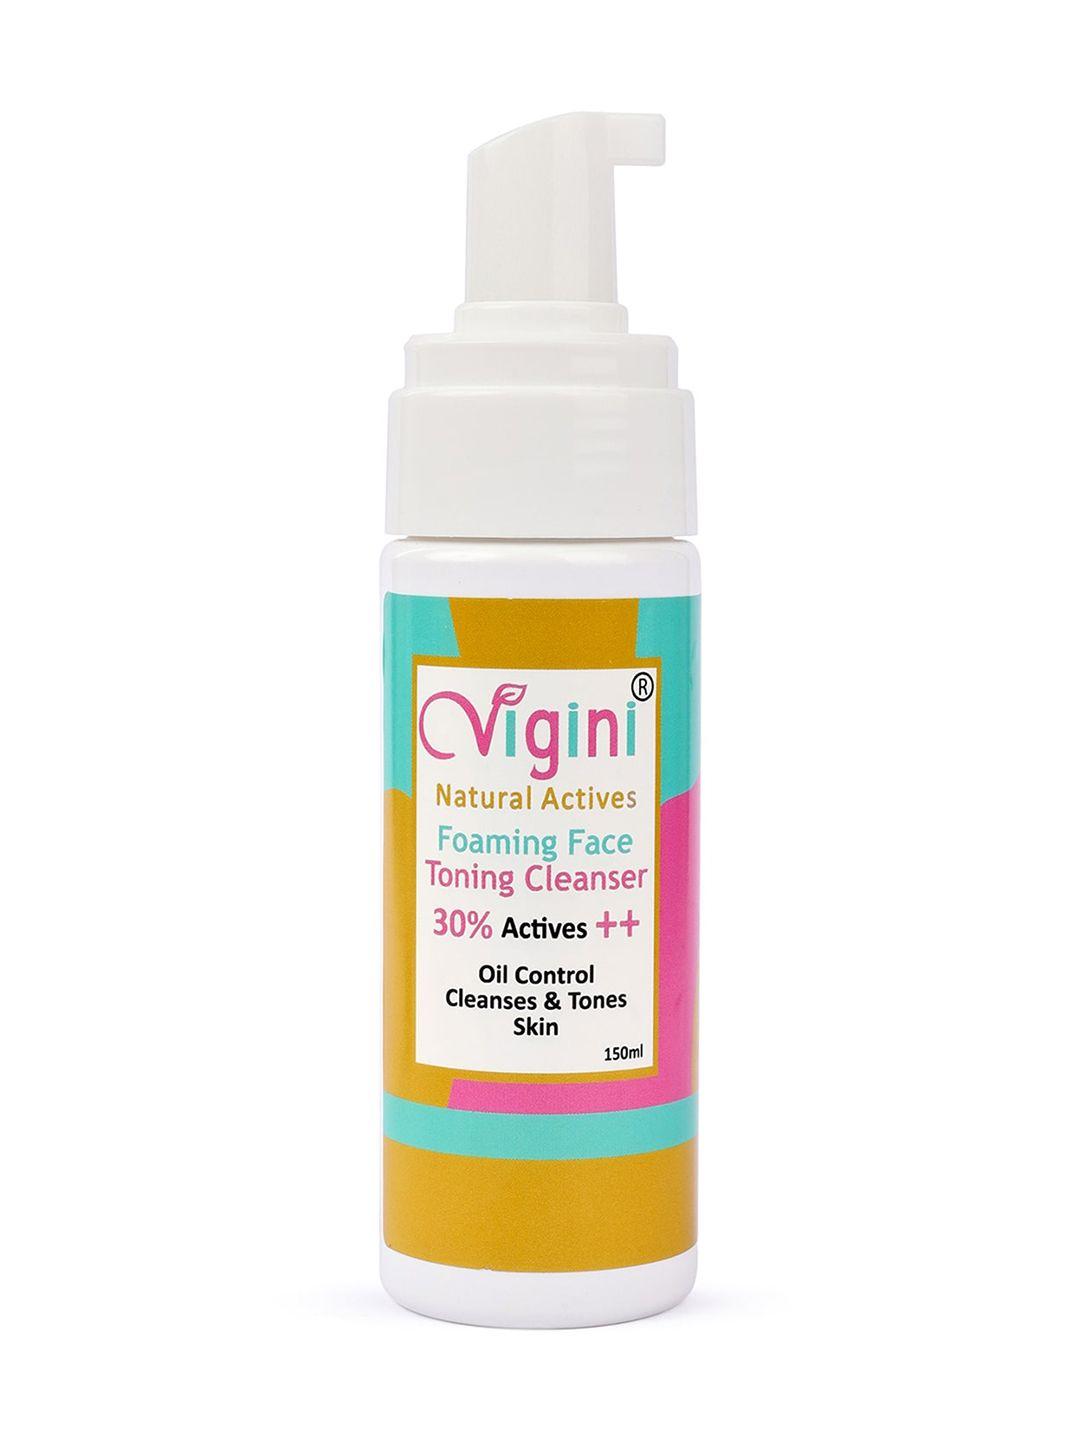 vigini 30% actives foaming toner cleanser anti acne face wash for oily prone skin-150ml